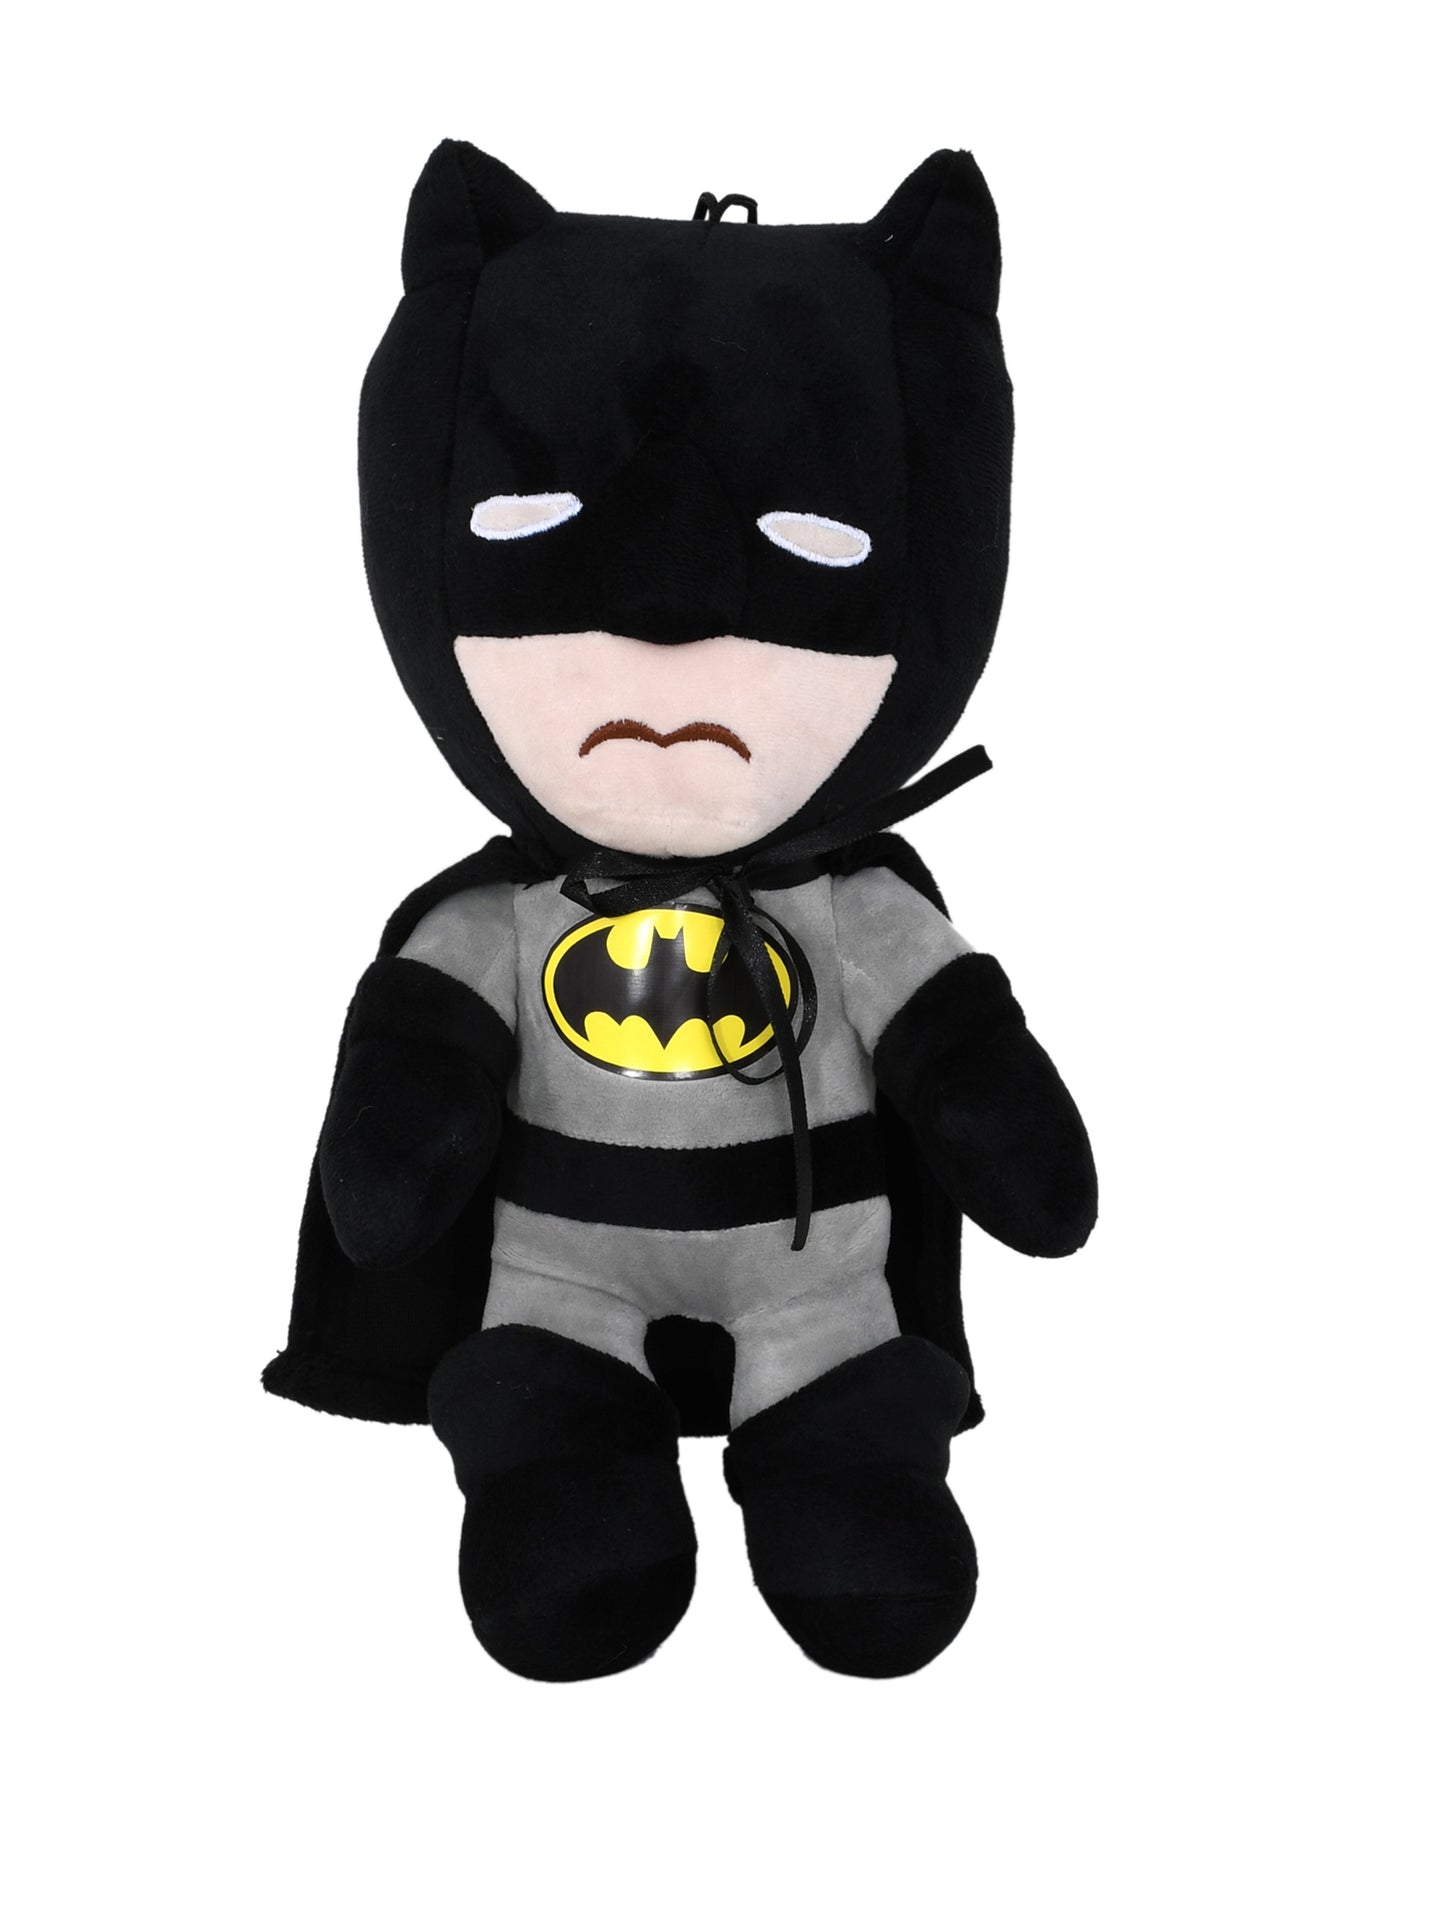 Mirada Plush Stuffed Grey Batman Soft Toy - 35cm